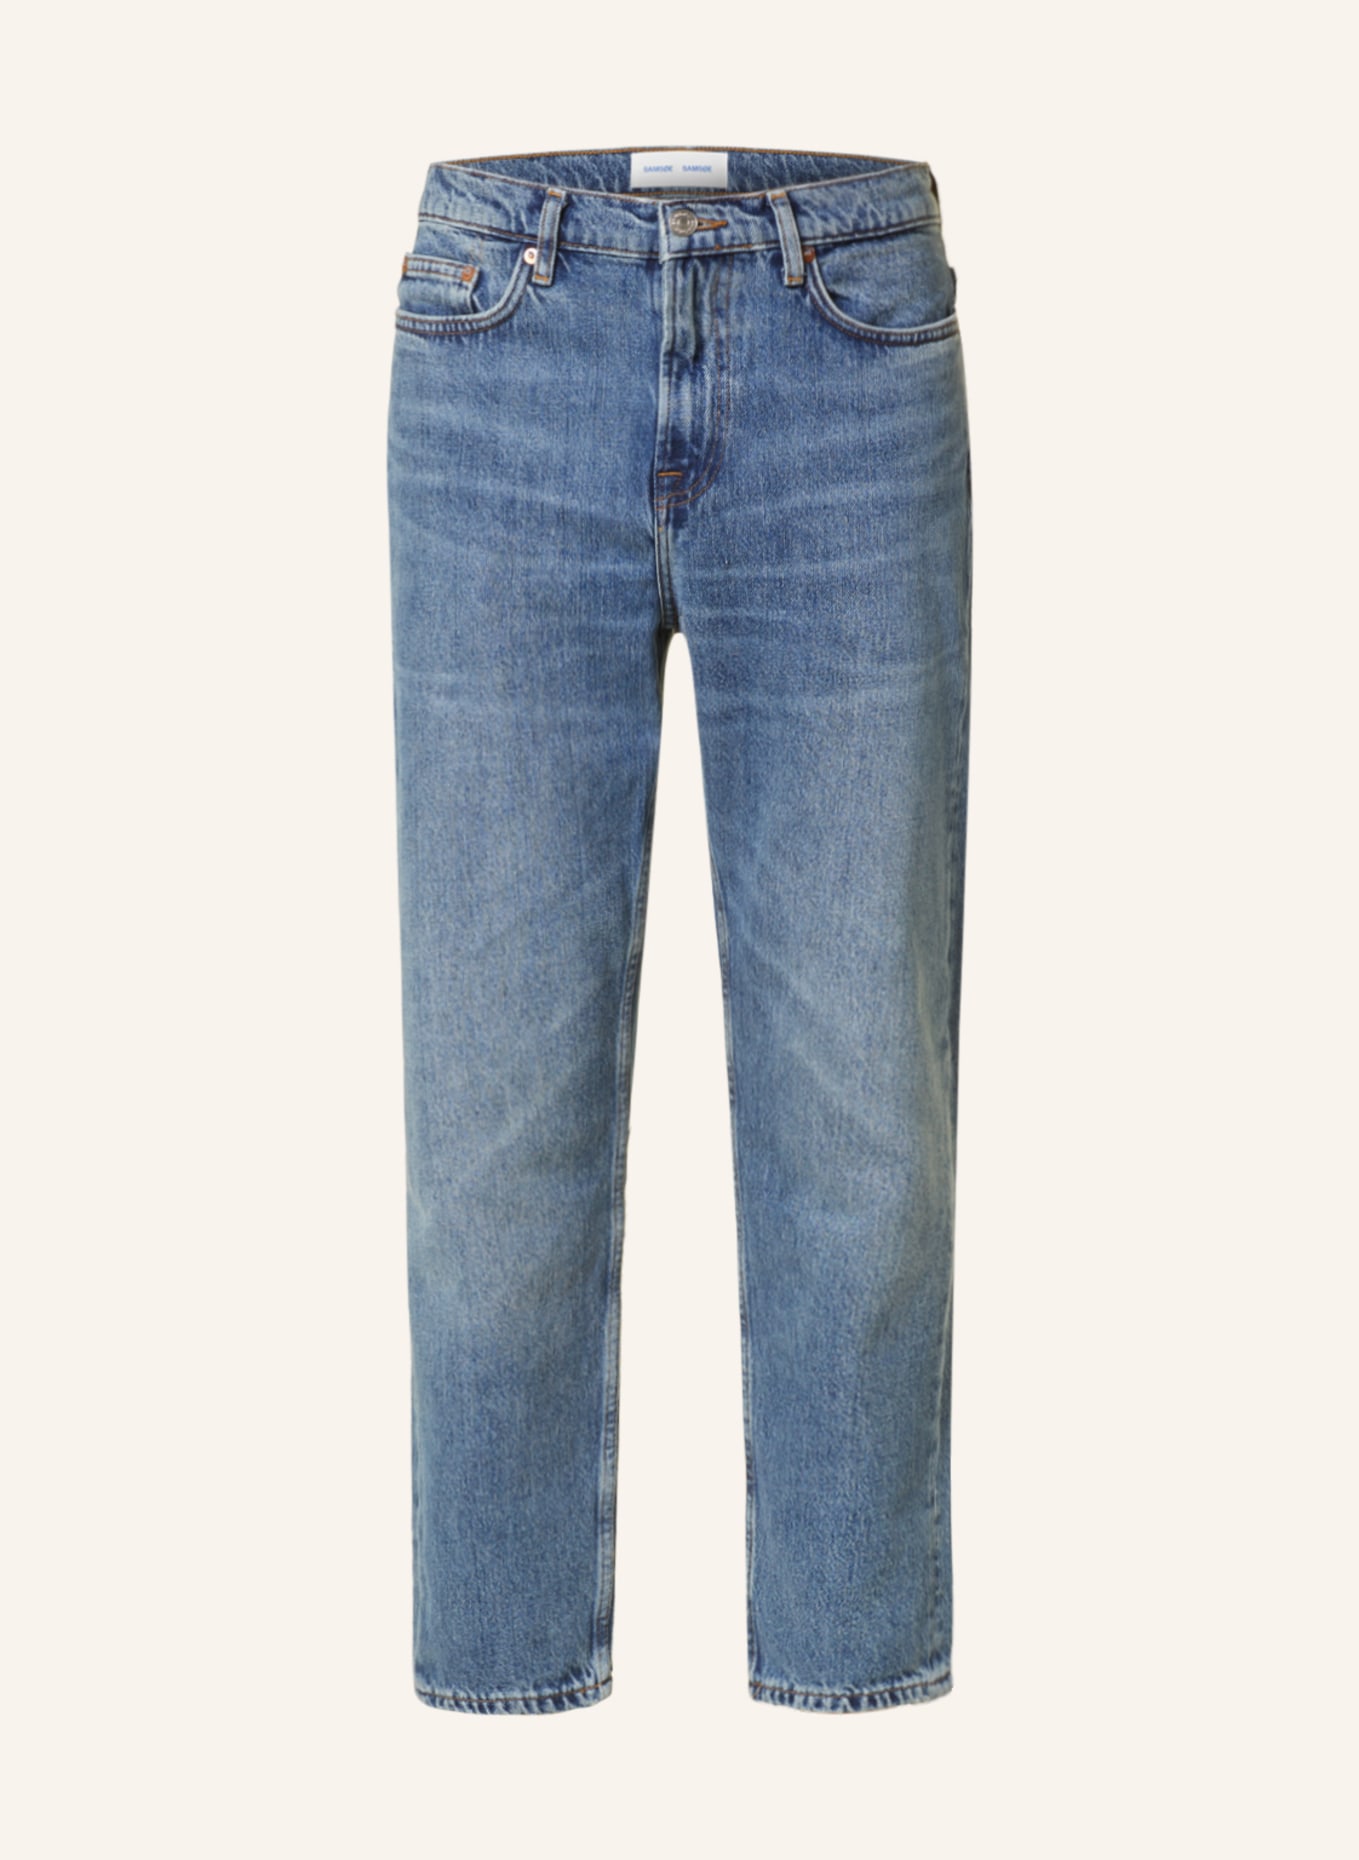 SAMSØE  SAMSØE Jeans COSMO Regular Fit, Farbe: CLR000945 HERITAGE (Bild 1)